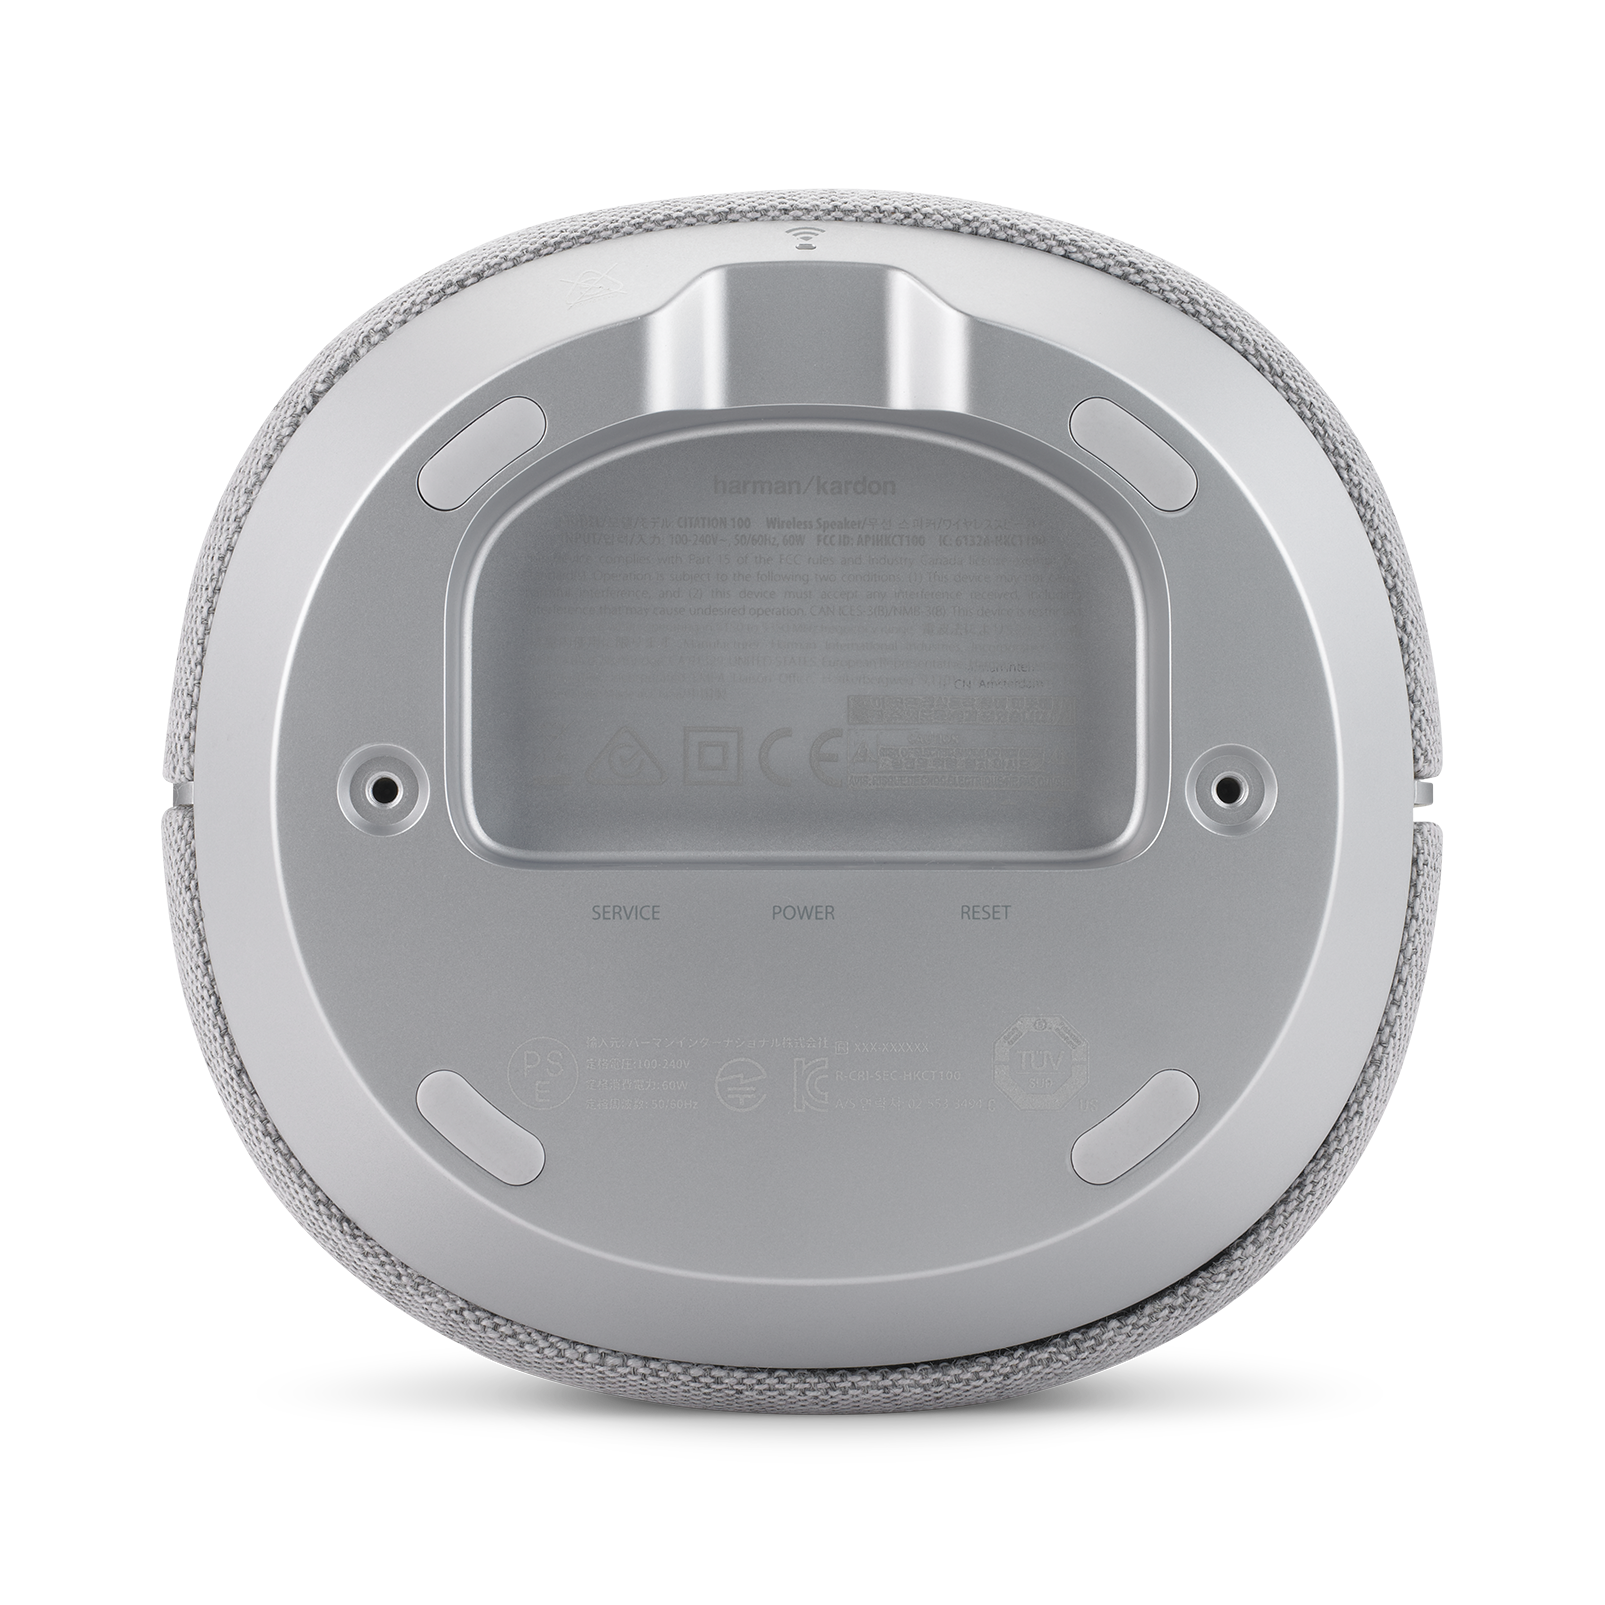 Harman Kardon Citation 100 - Grey - The smallest, smartest home speaker with impactful sound - Detailshot 3